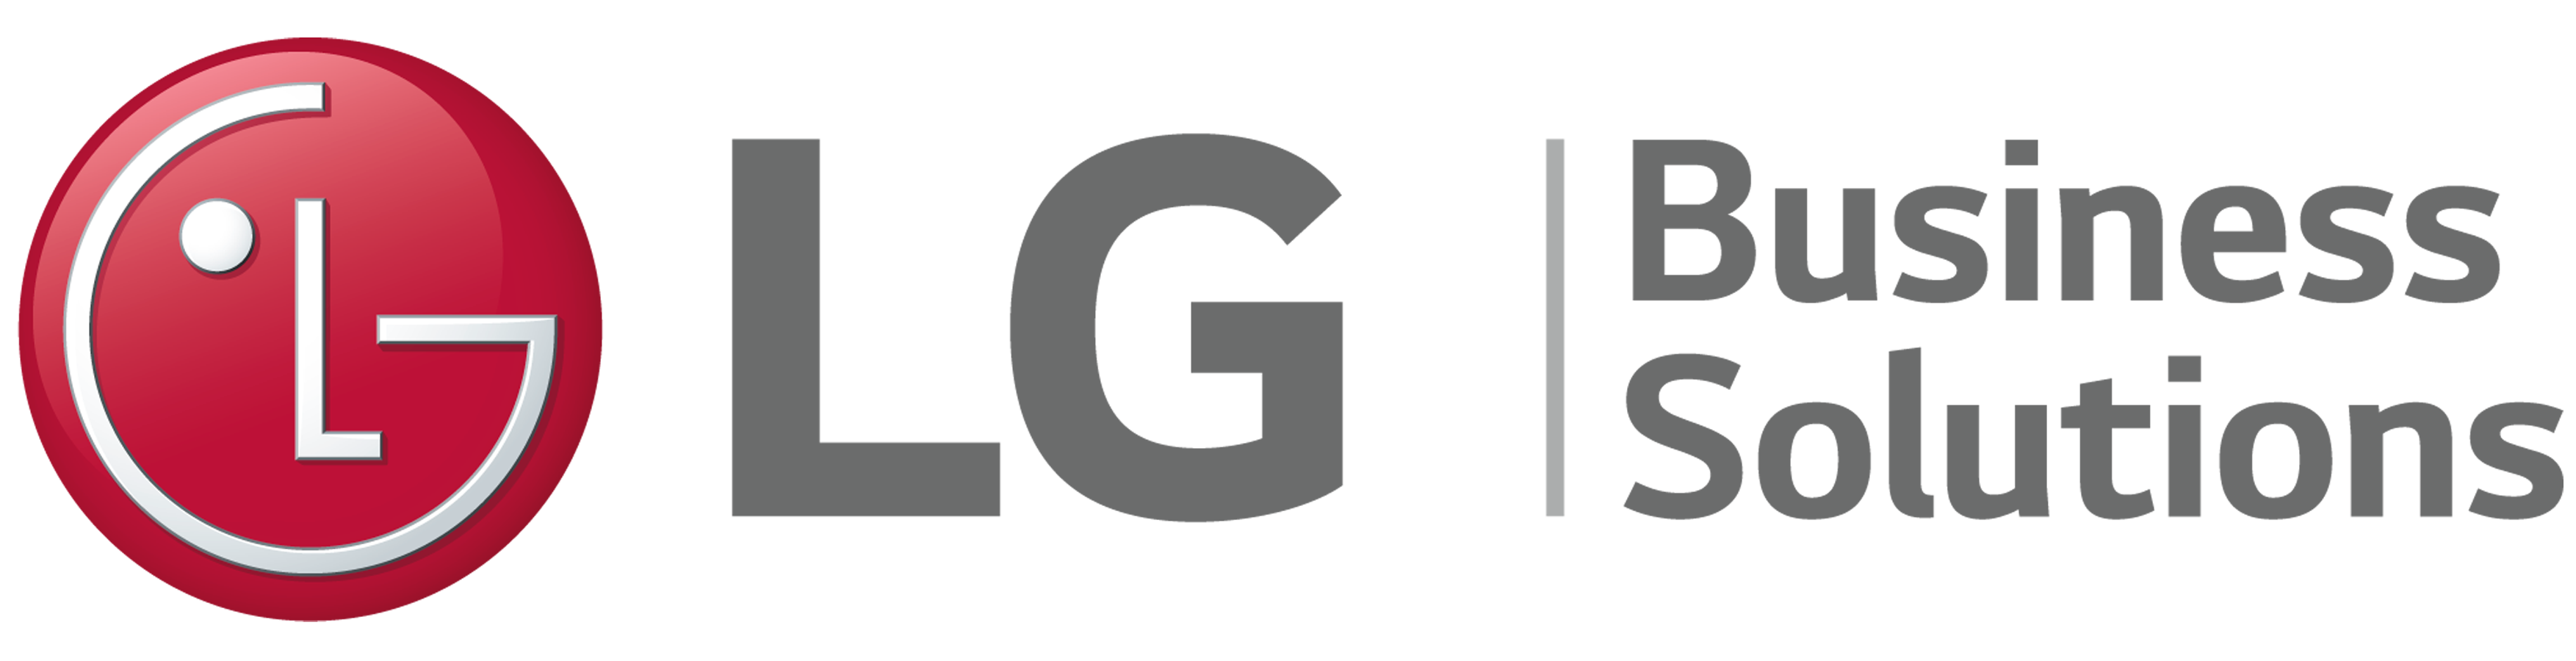 lgbusinesssolutions_logo